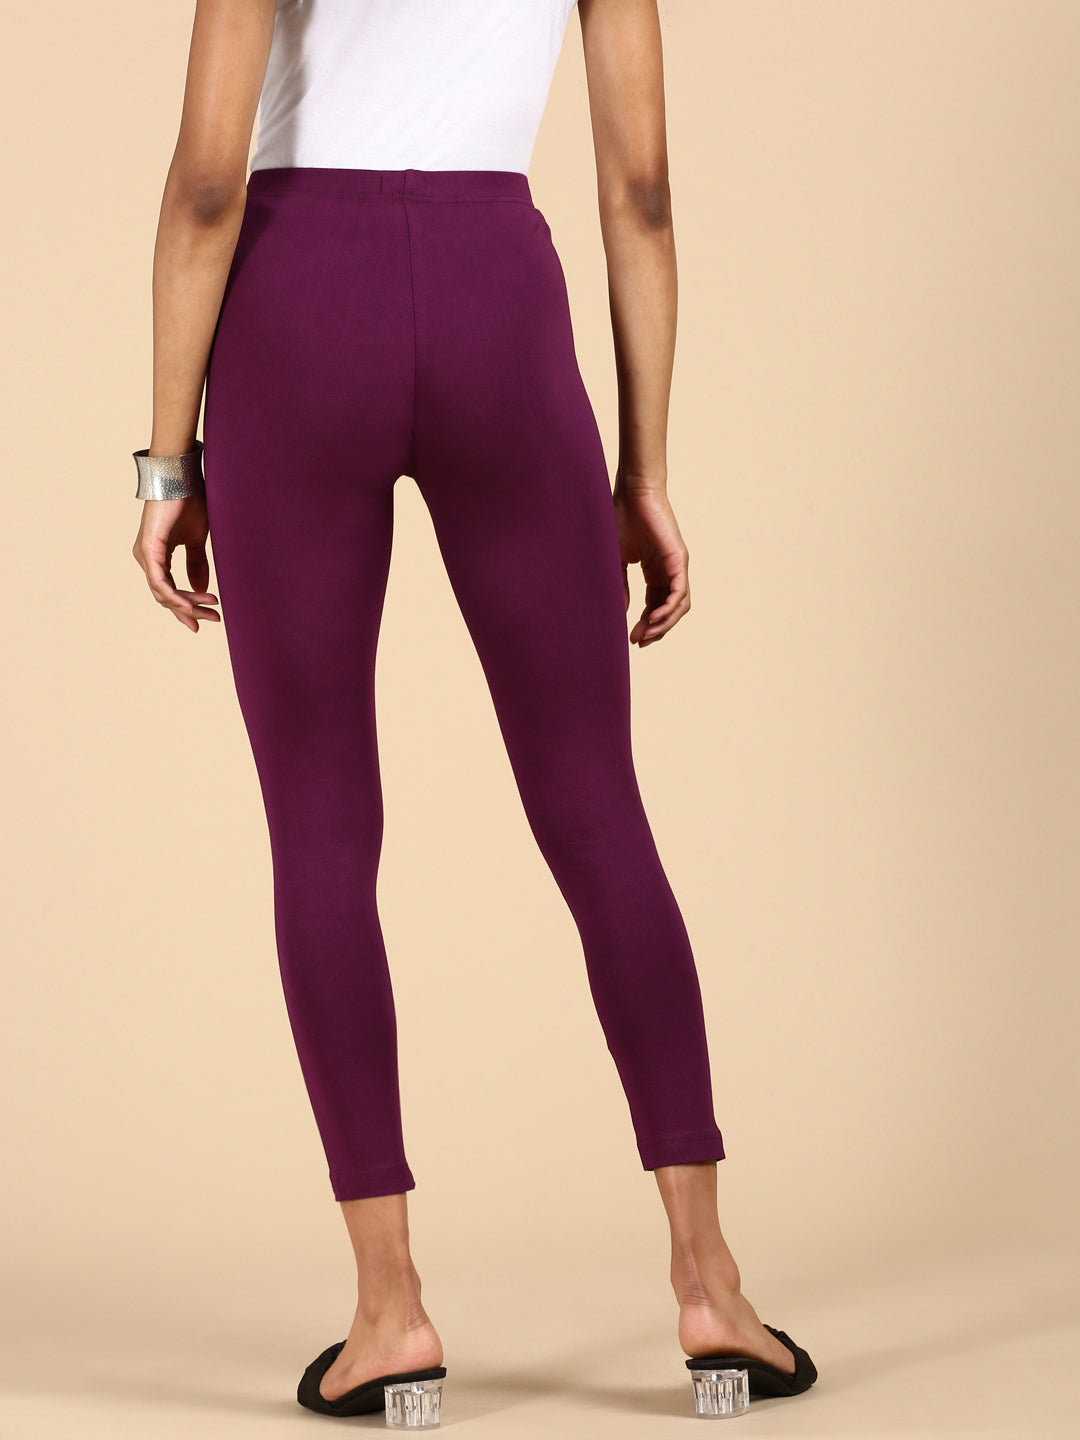 De Moza Ladies Ankle Length Leggings Solid Cotton Dark Purple - De Moza